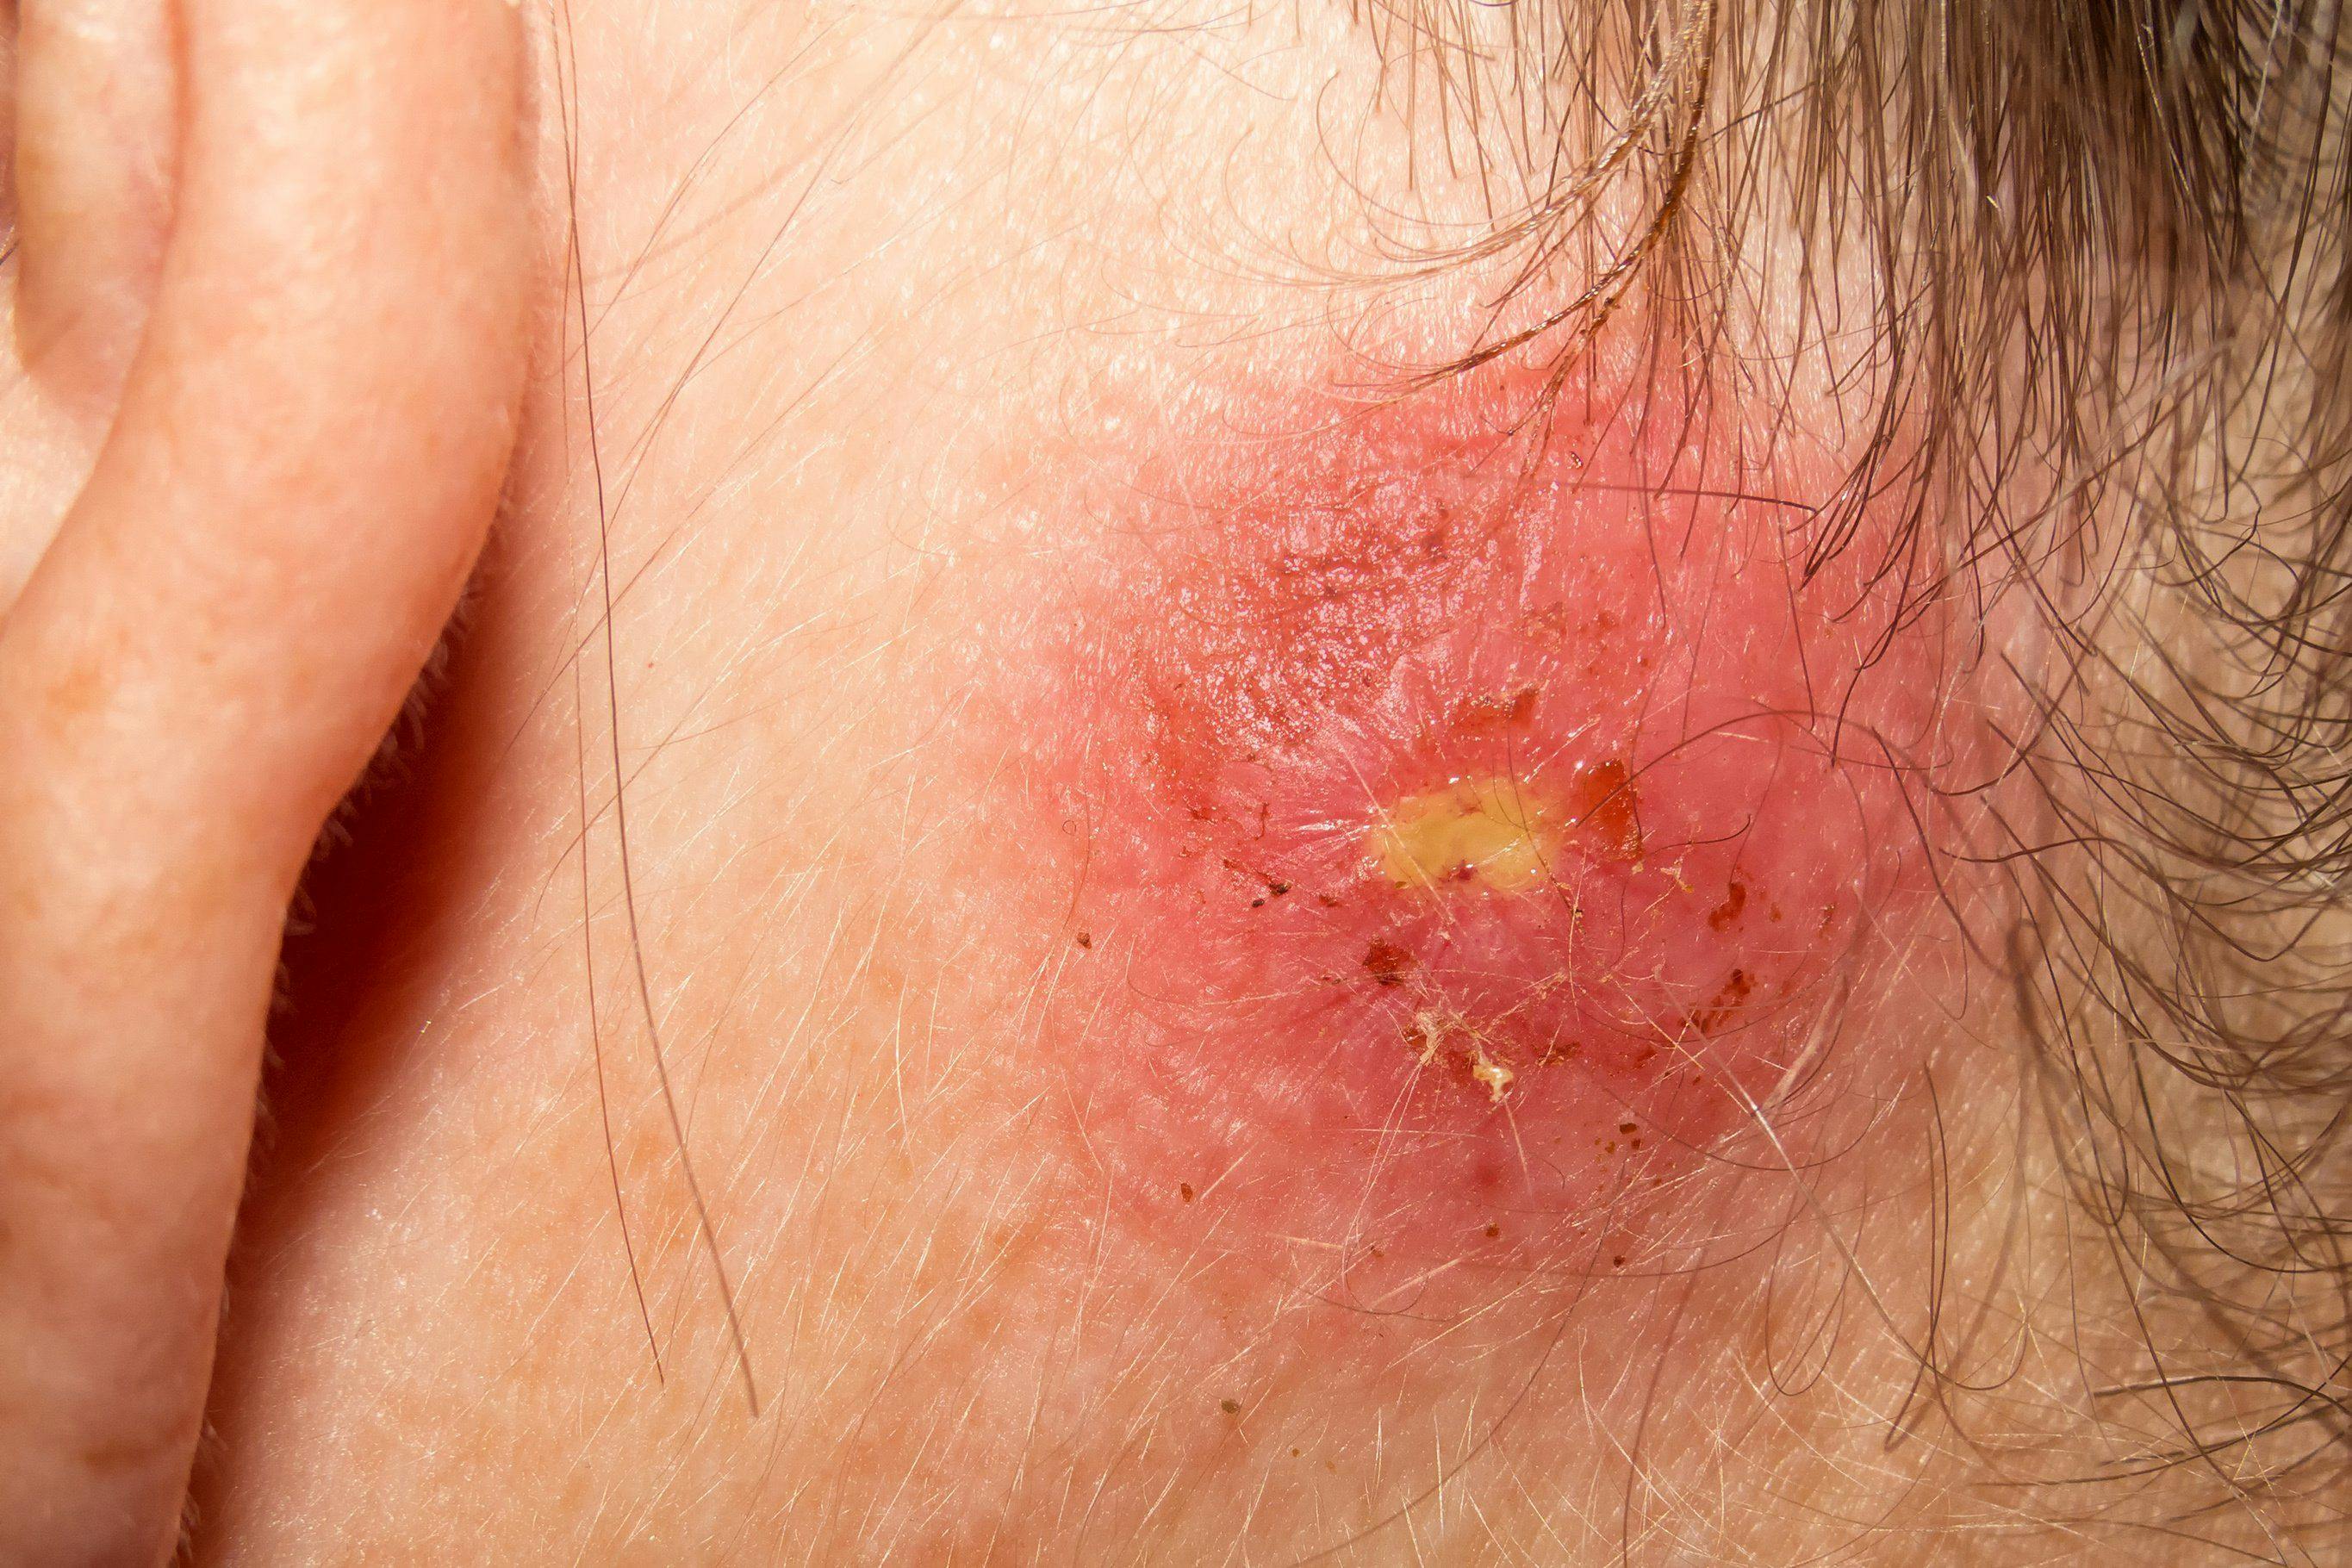 Staphylococcus aureus behind ear Staph infection